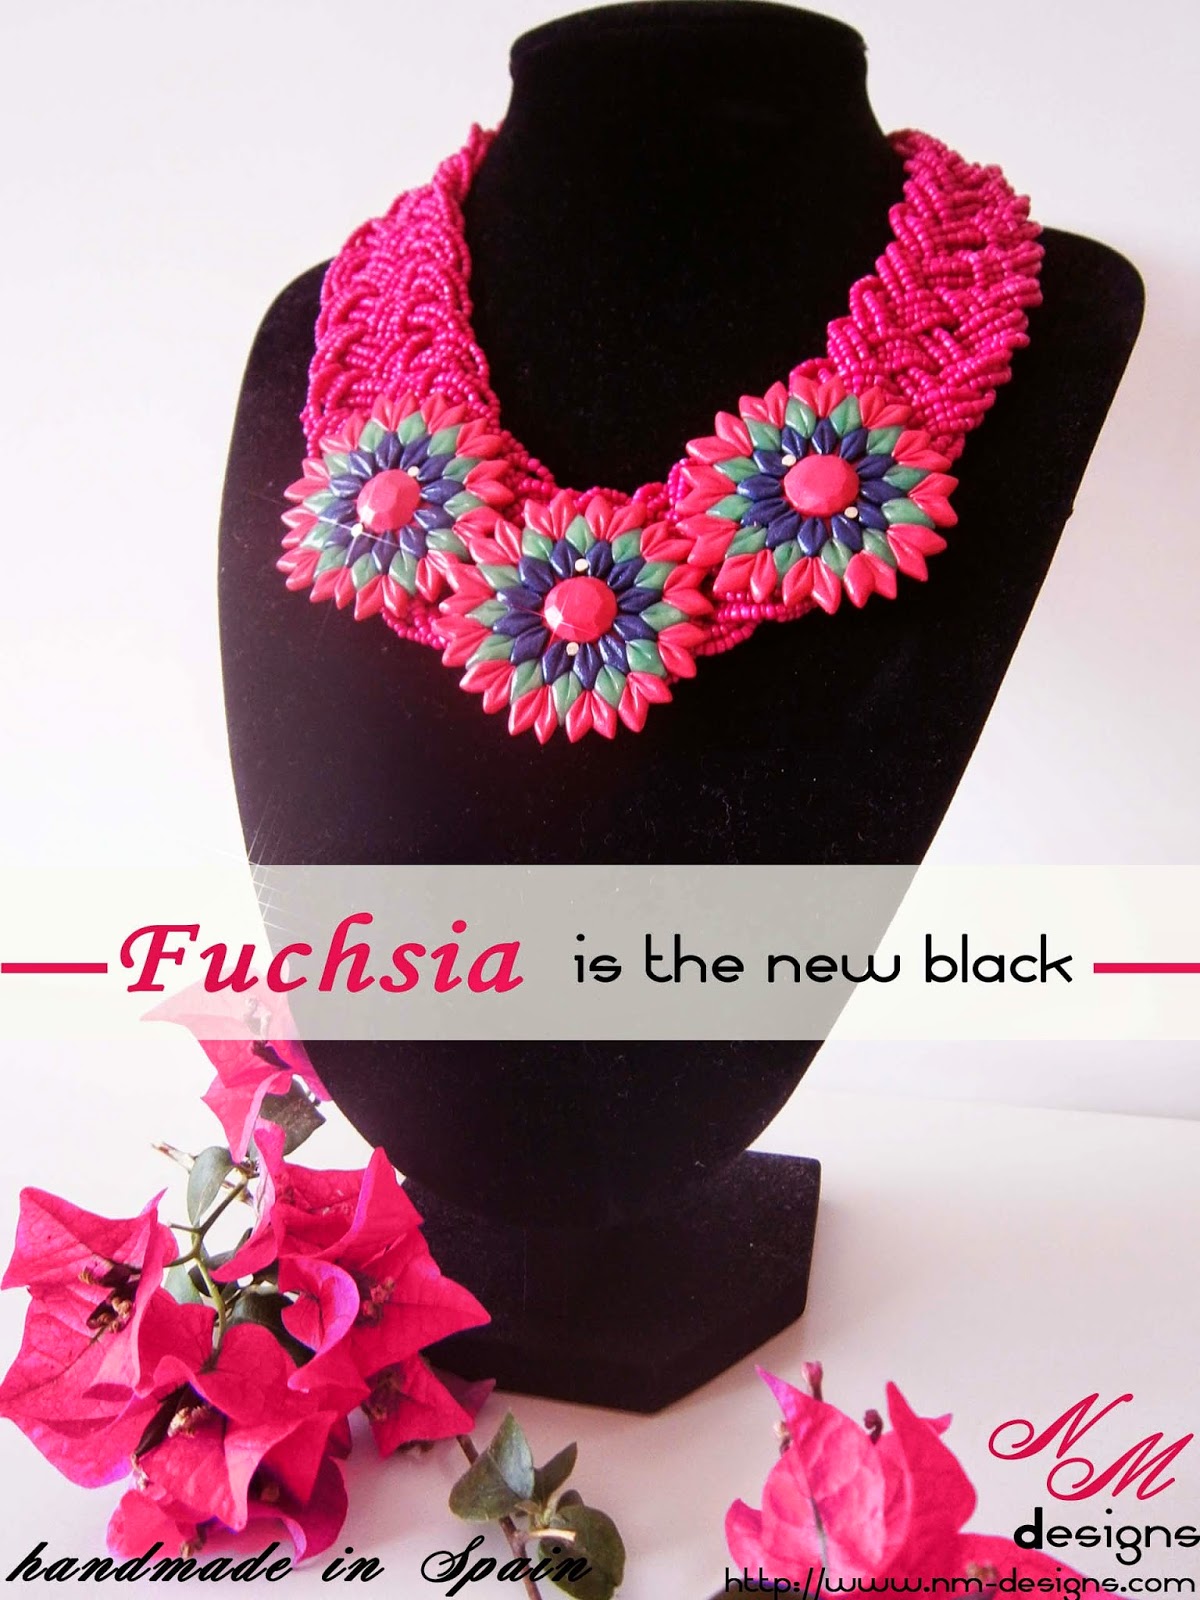 Fuchsia is the new black